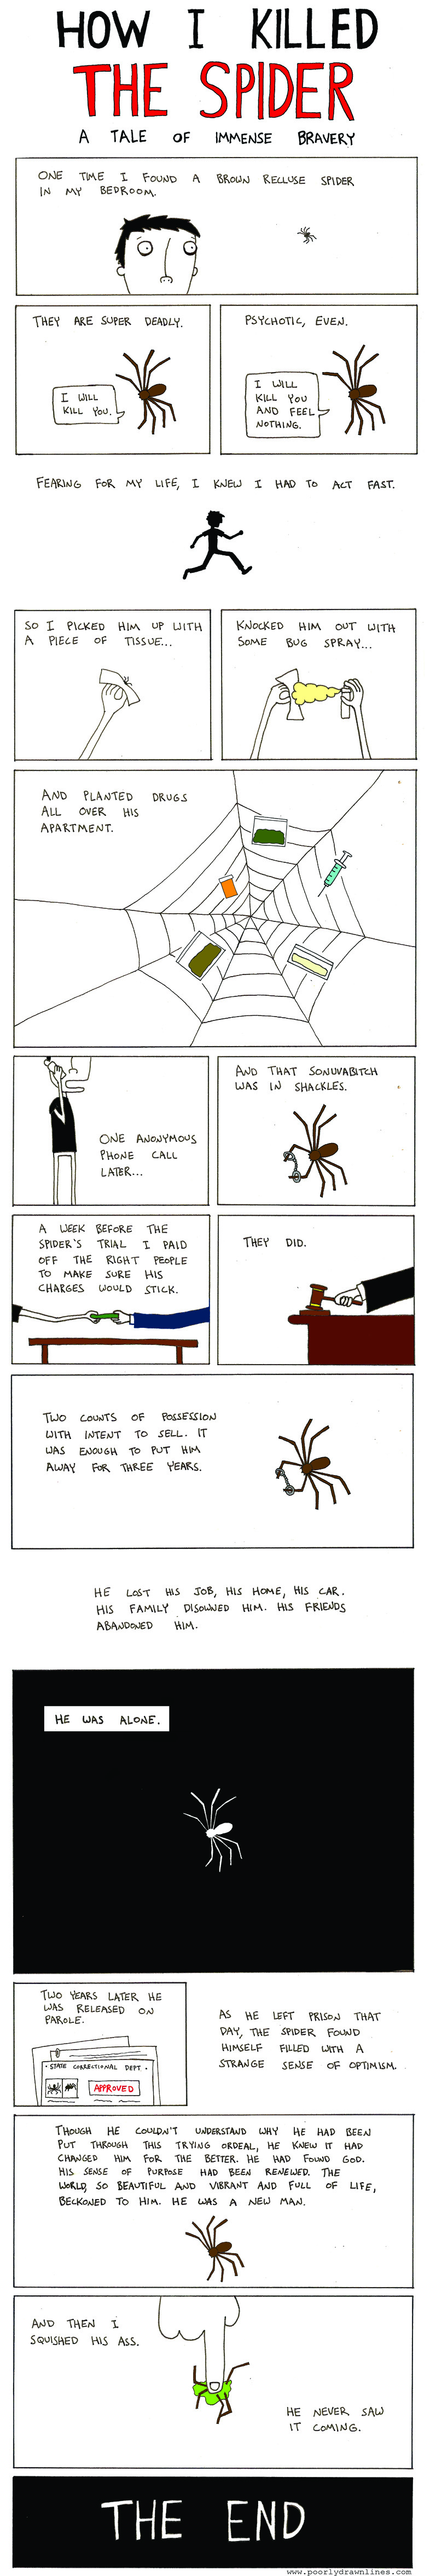 how-i-killed-the-spider.jpg